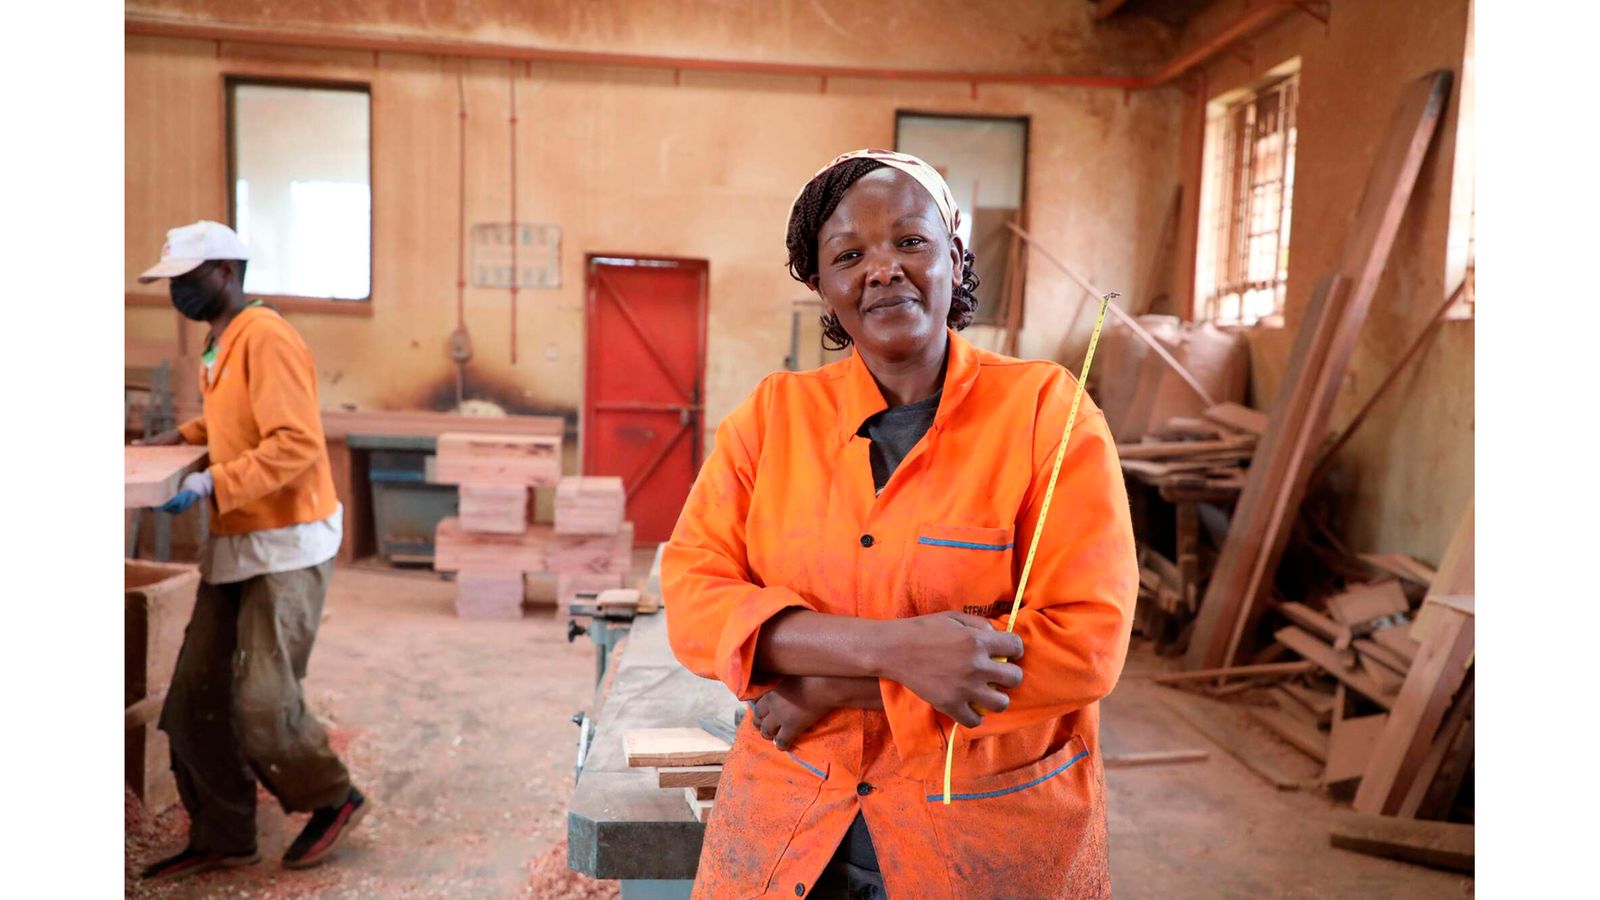 Beatrice Kiniti, the carpenter breaking stereotypes in Nairobi | Nation